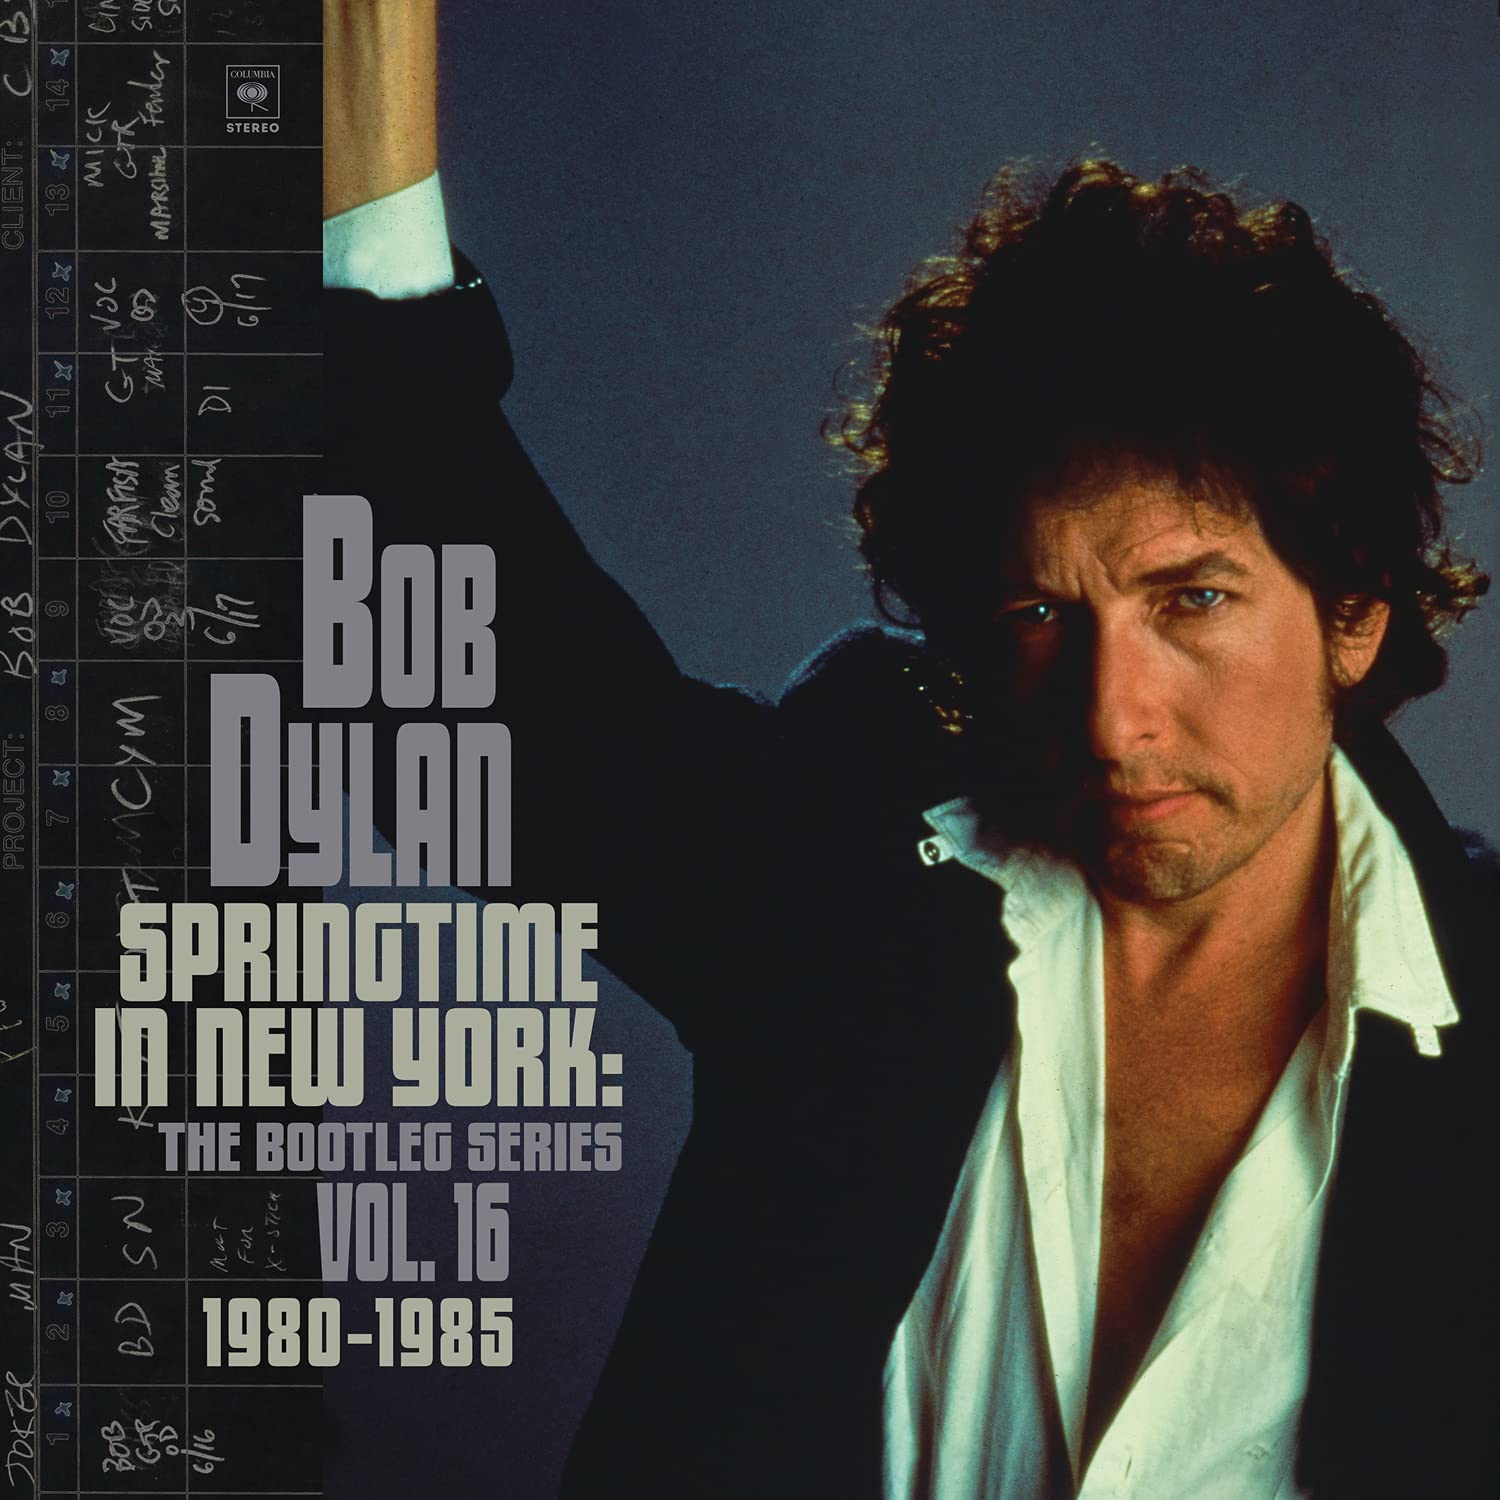 Copertina Vinile 33 giri The Bootleg Series Vol.16 di Bob Dylan